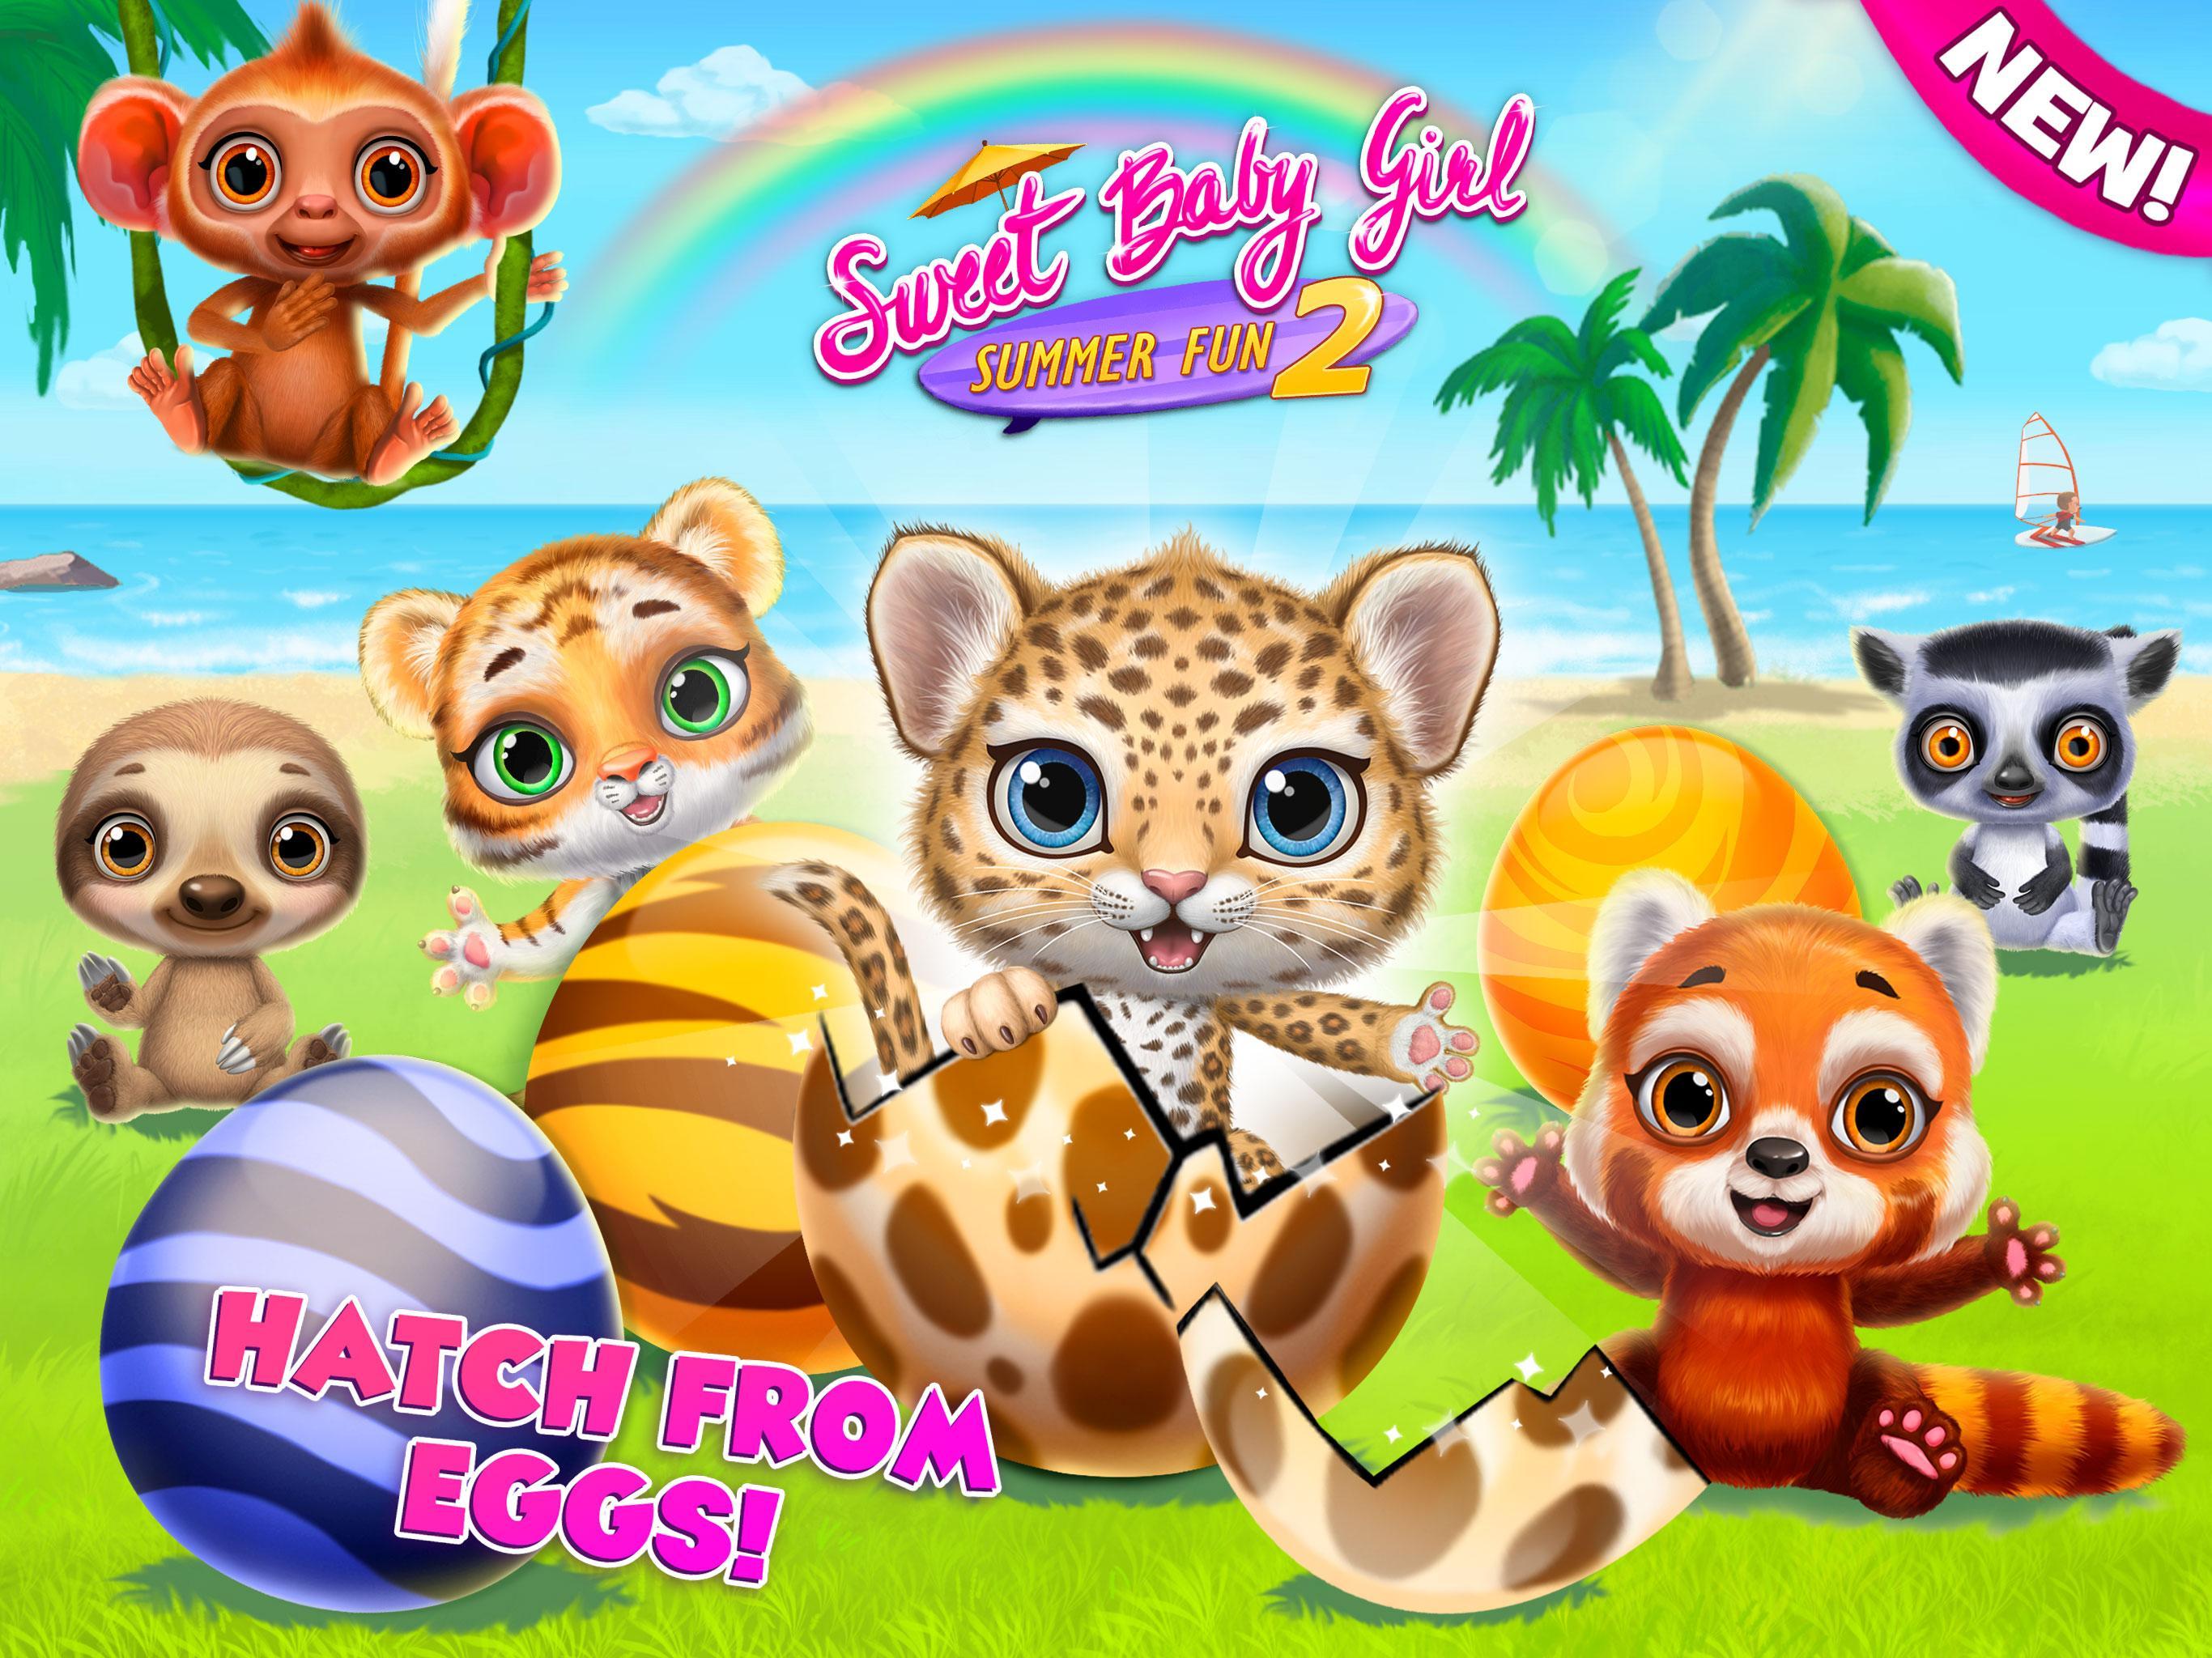 Sweet Baby Girl Summer Fun 2 - Sunny Makeover Game 7.0.1511 Screenshot 17